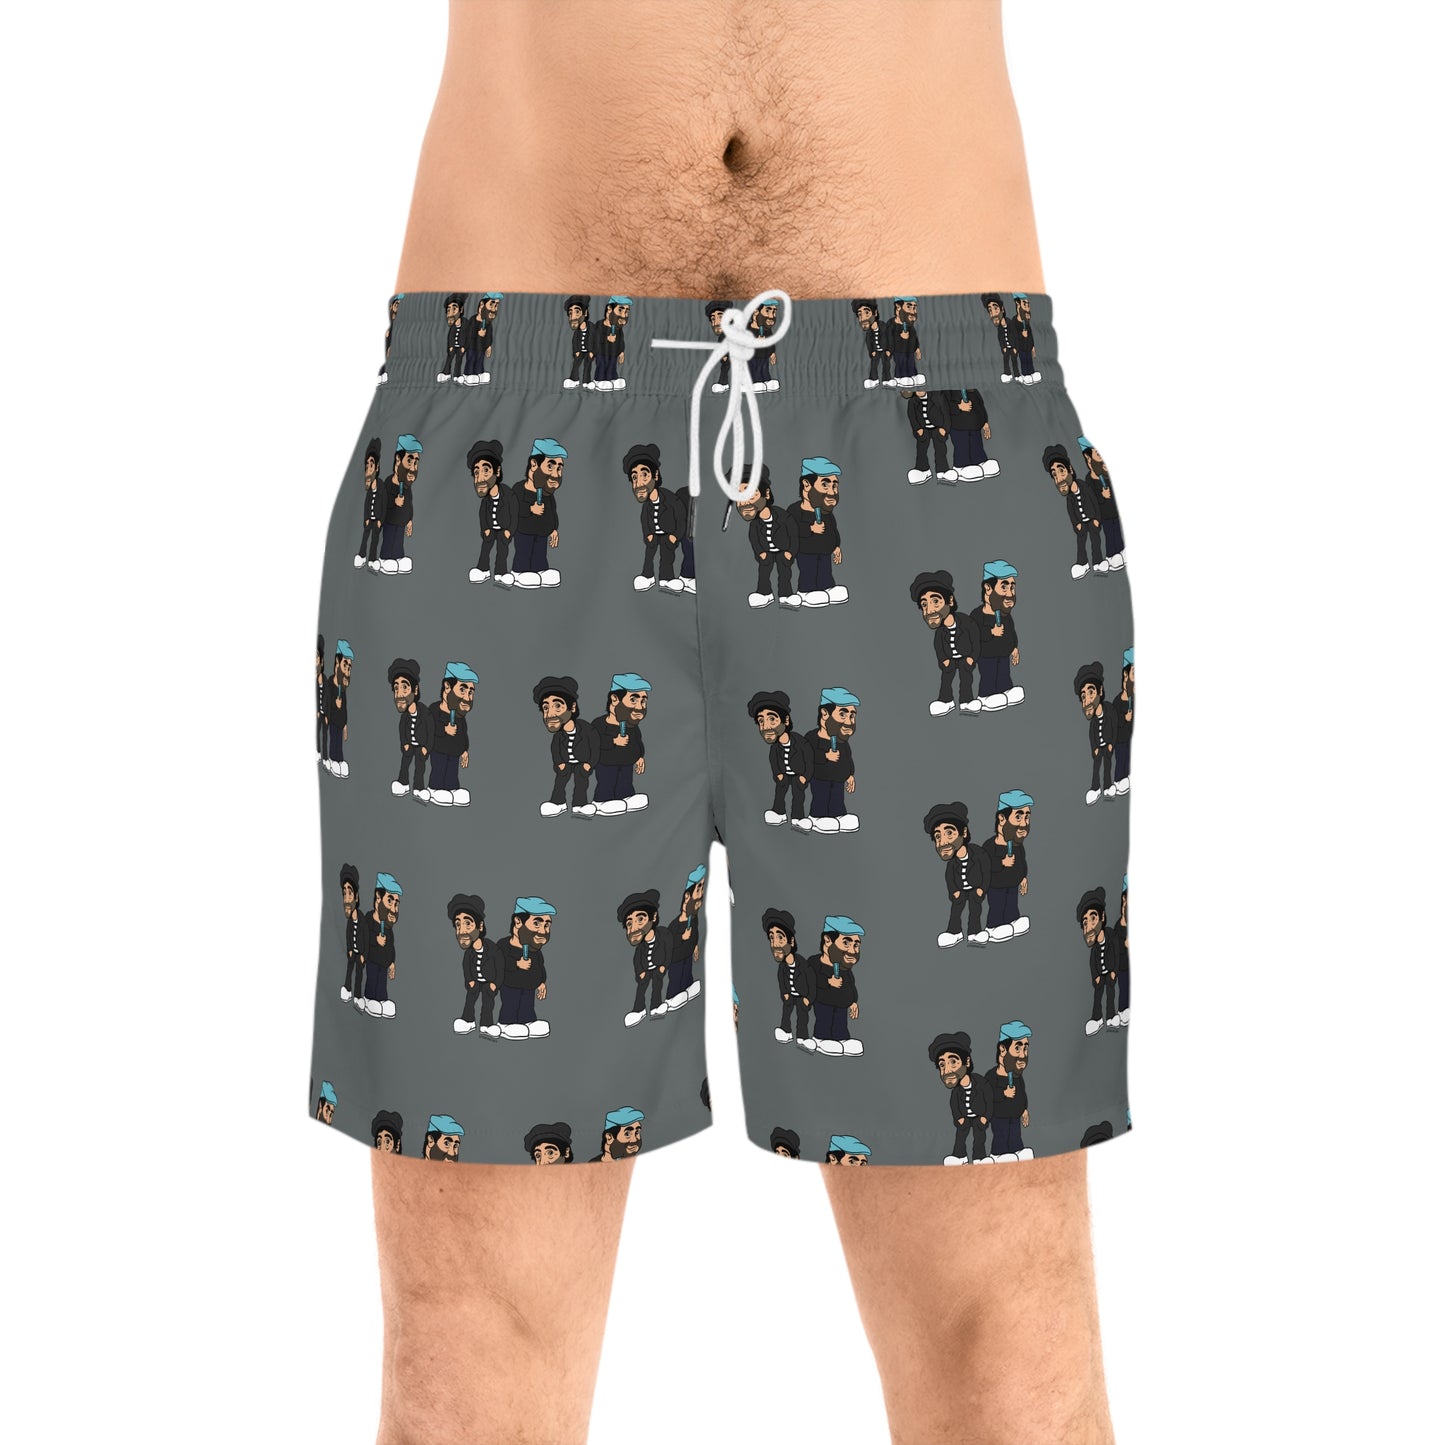 Los Caquitos Chespirito Men's Swim Shorts